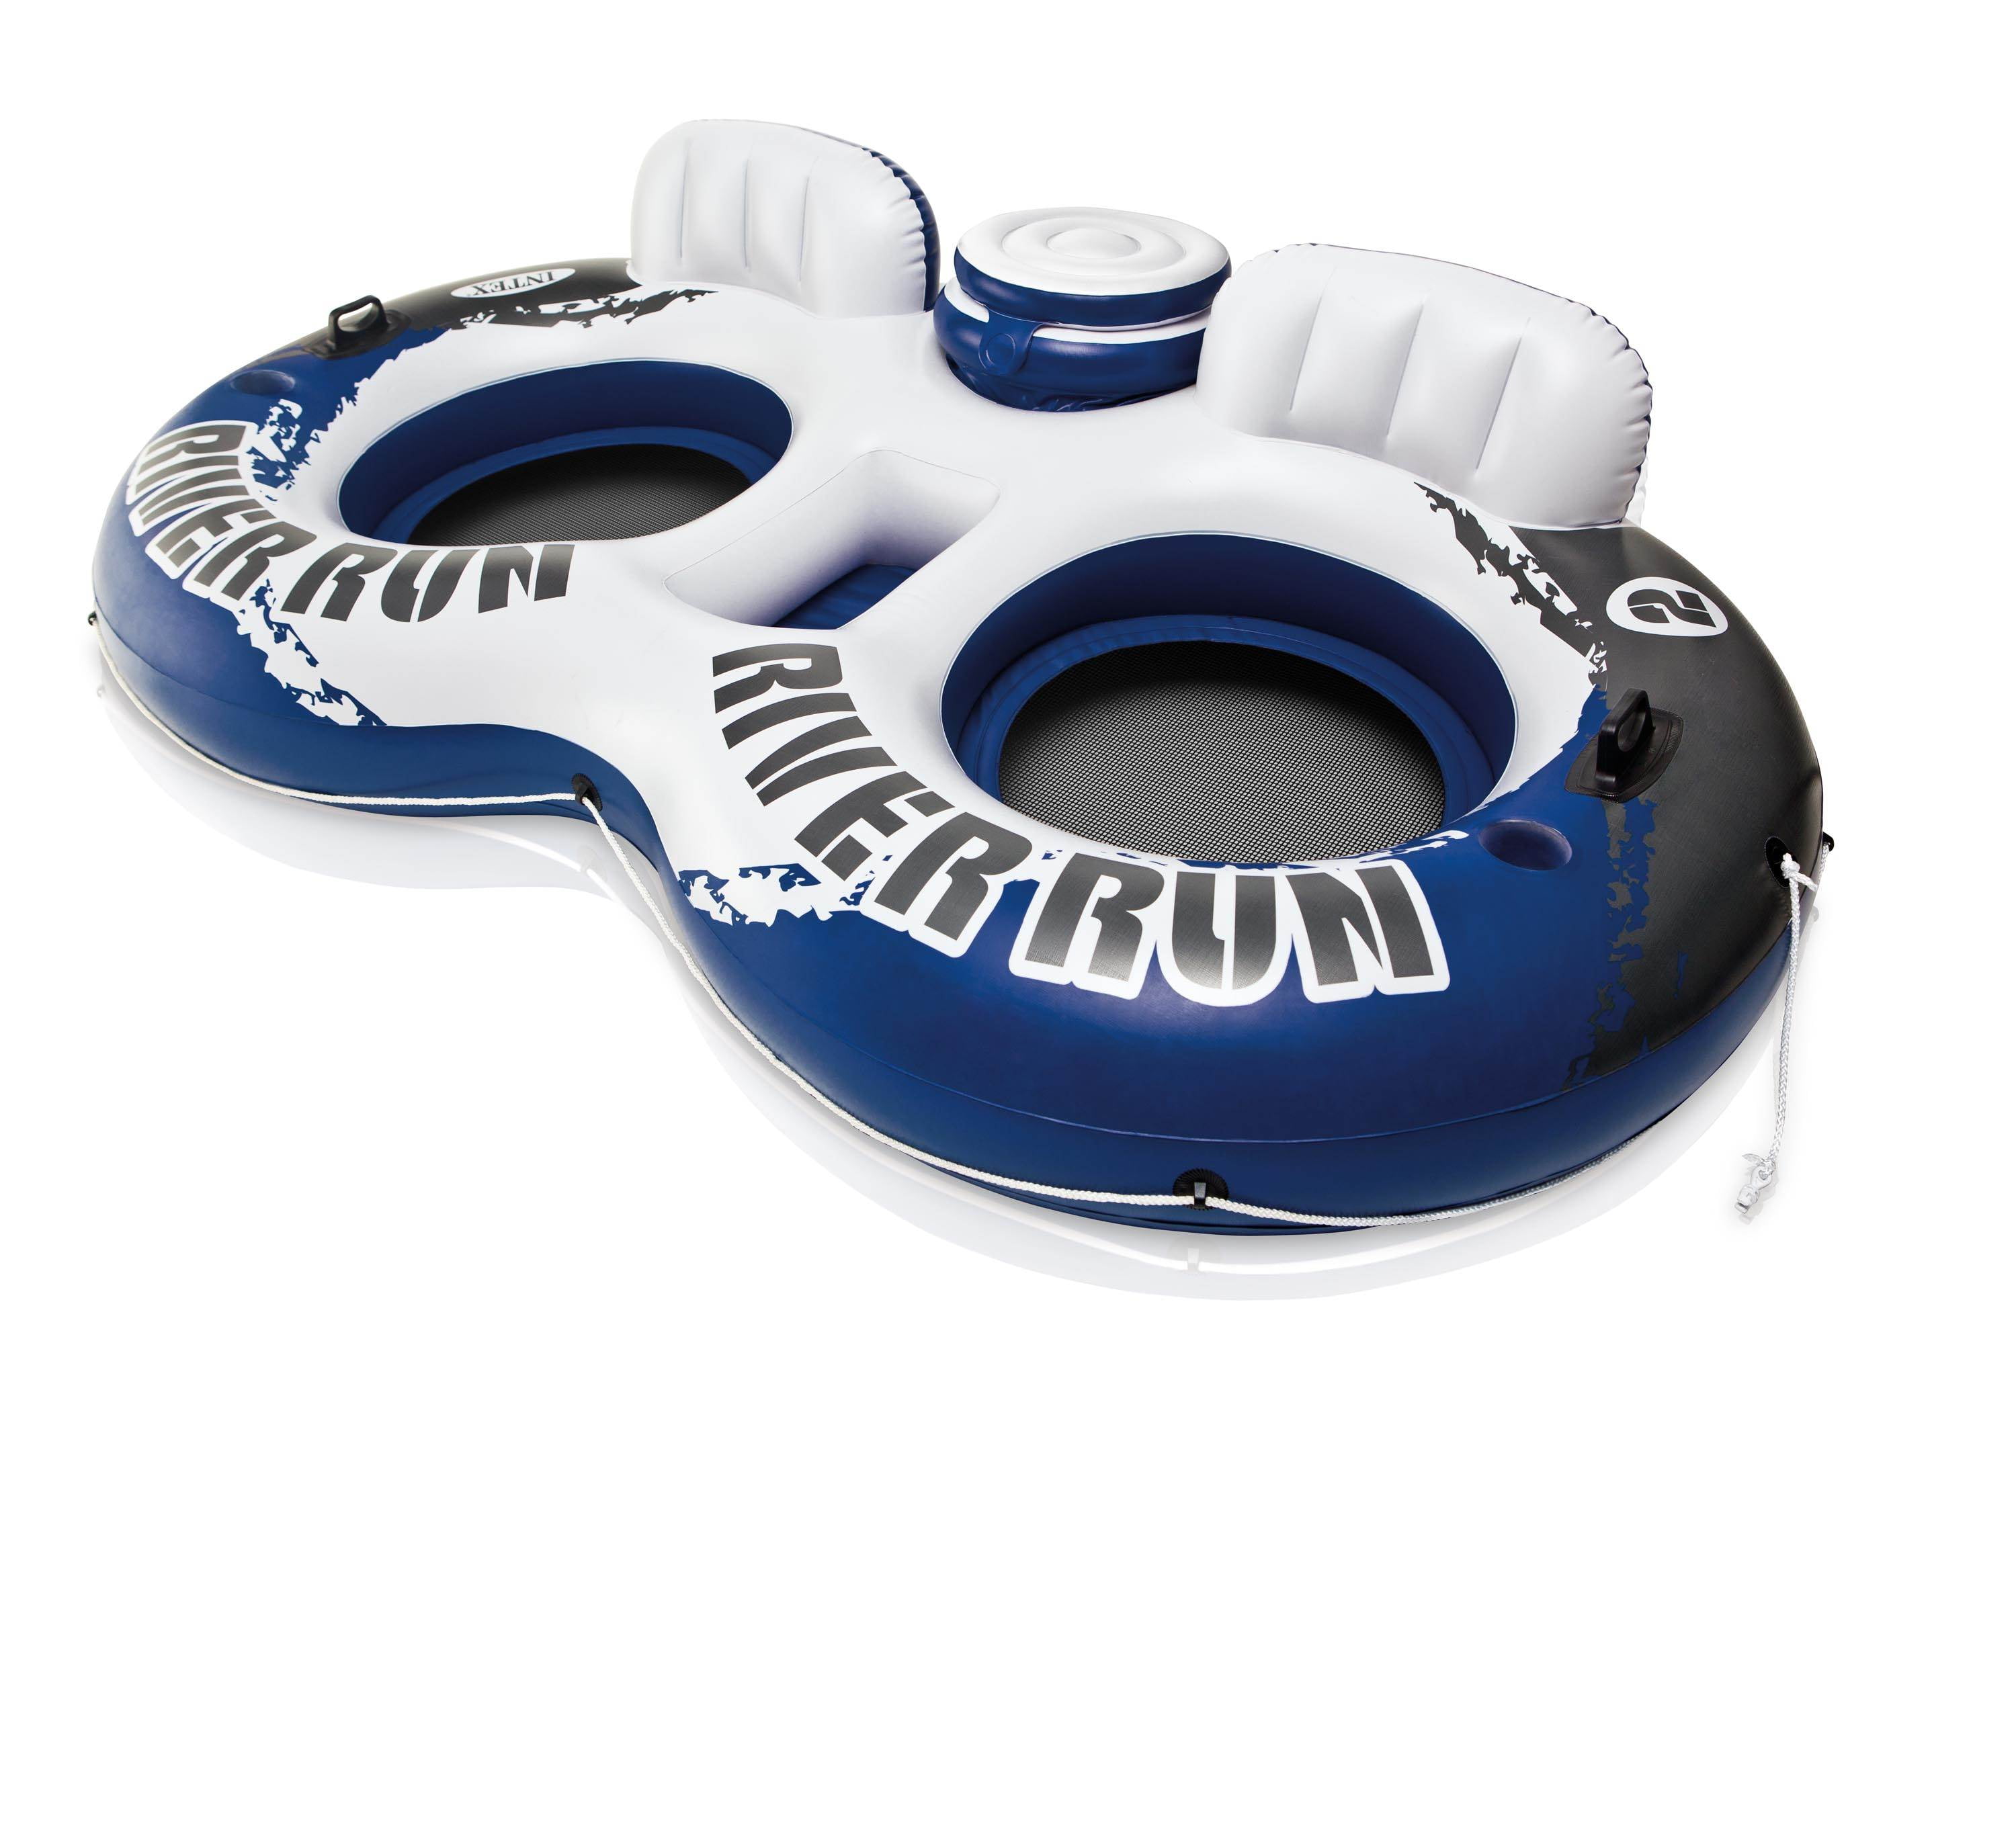 Intex One River Run I Inflatable Tube 58825 1 Person Rider Blue & Gray 